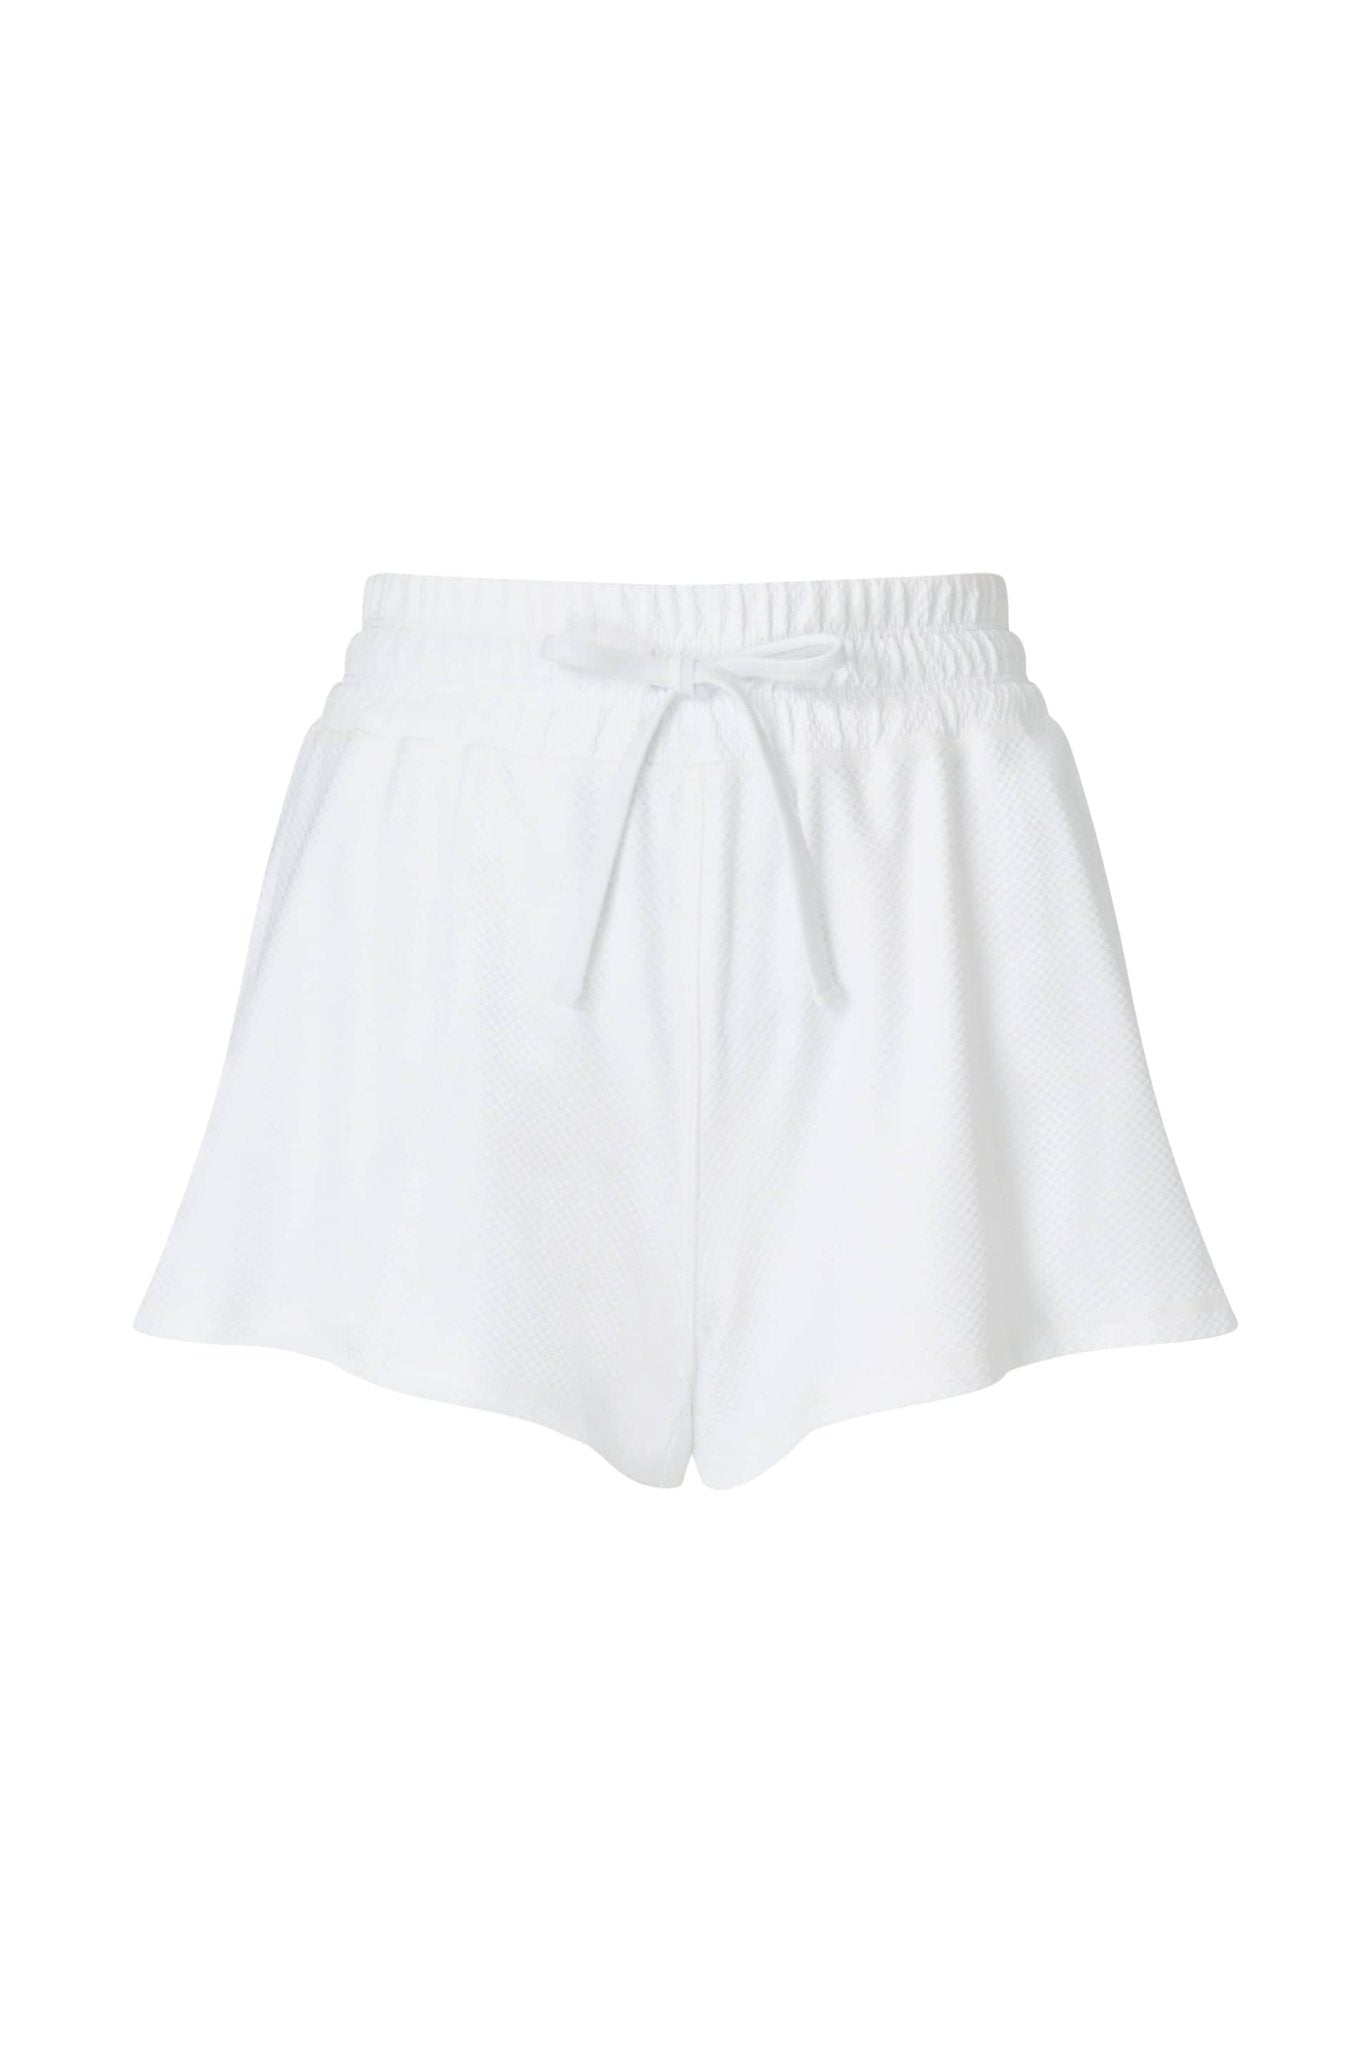 Montauk Shorts in White - Heidi Klein - UK Store